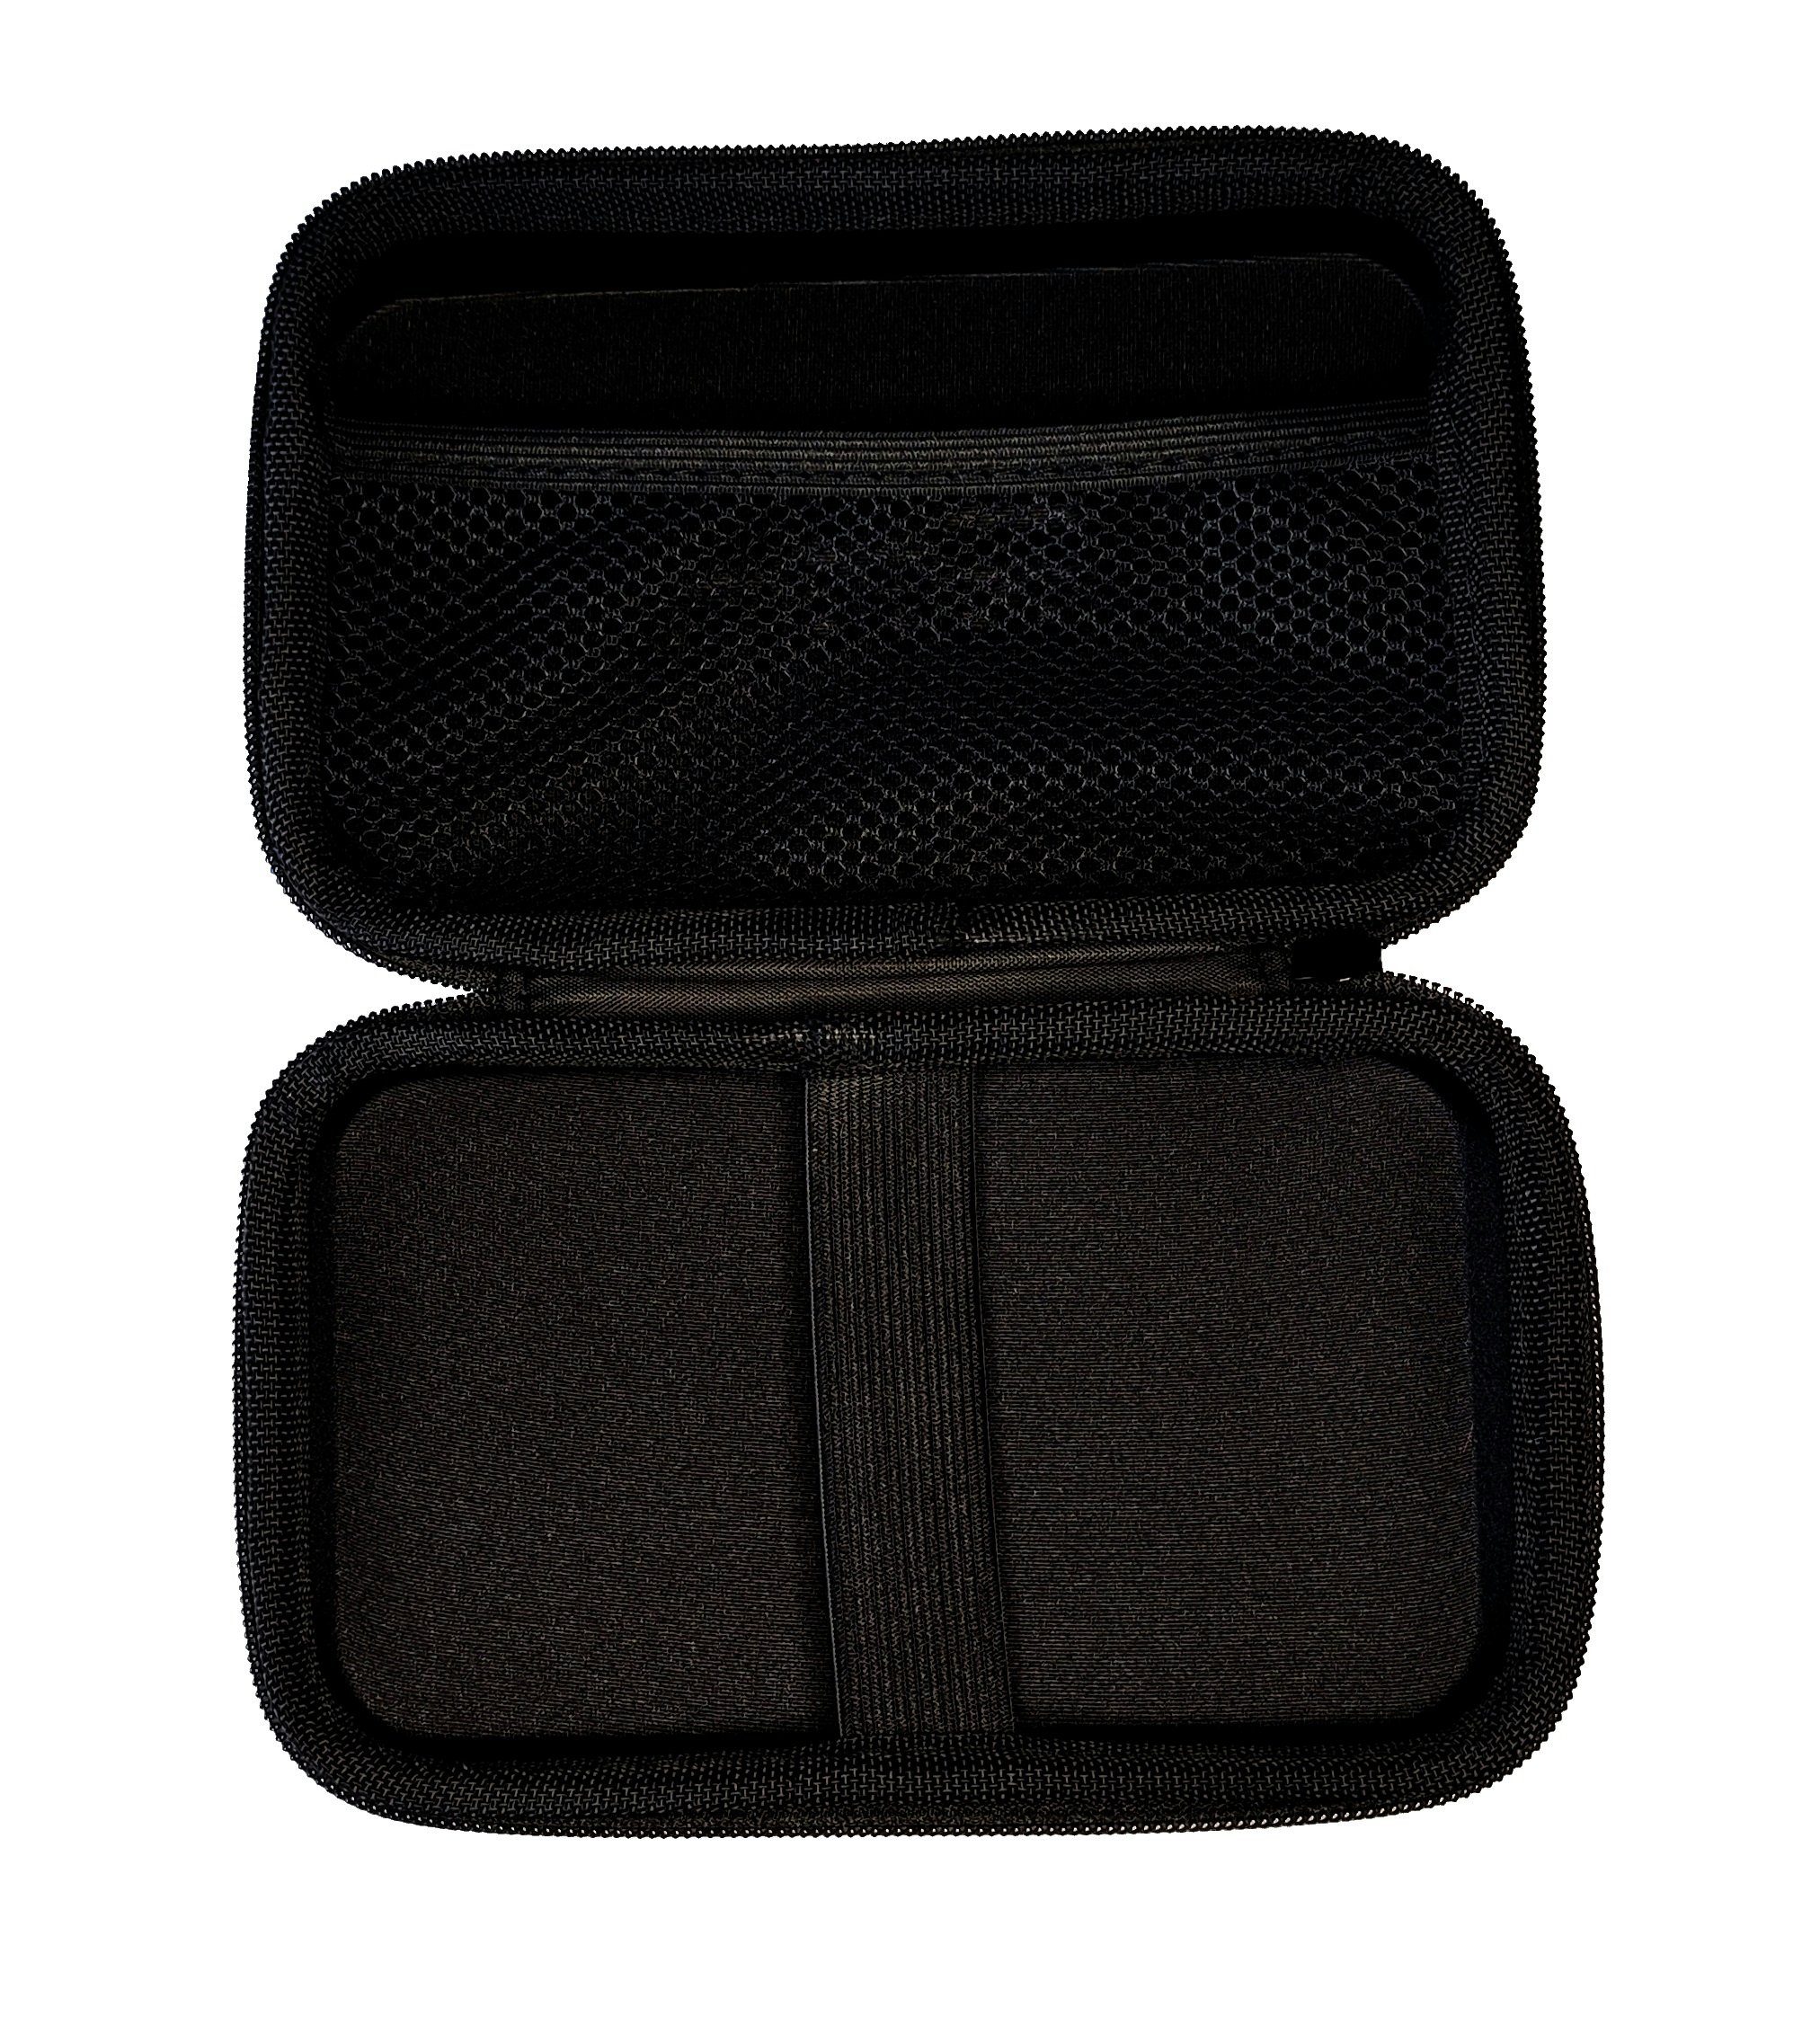 Schutztasche Provance Festplatten HDD mm EVA (L), SSD 180x100x60 Festplattentasche externe